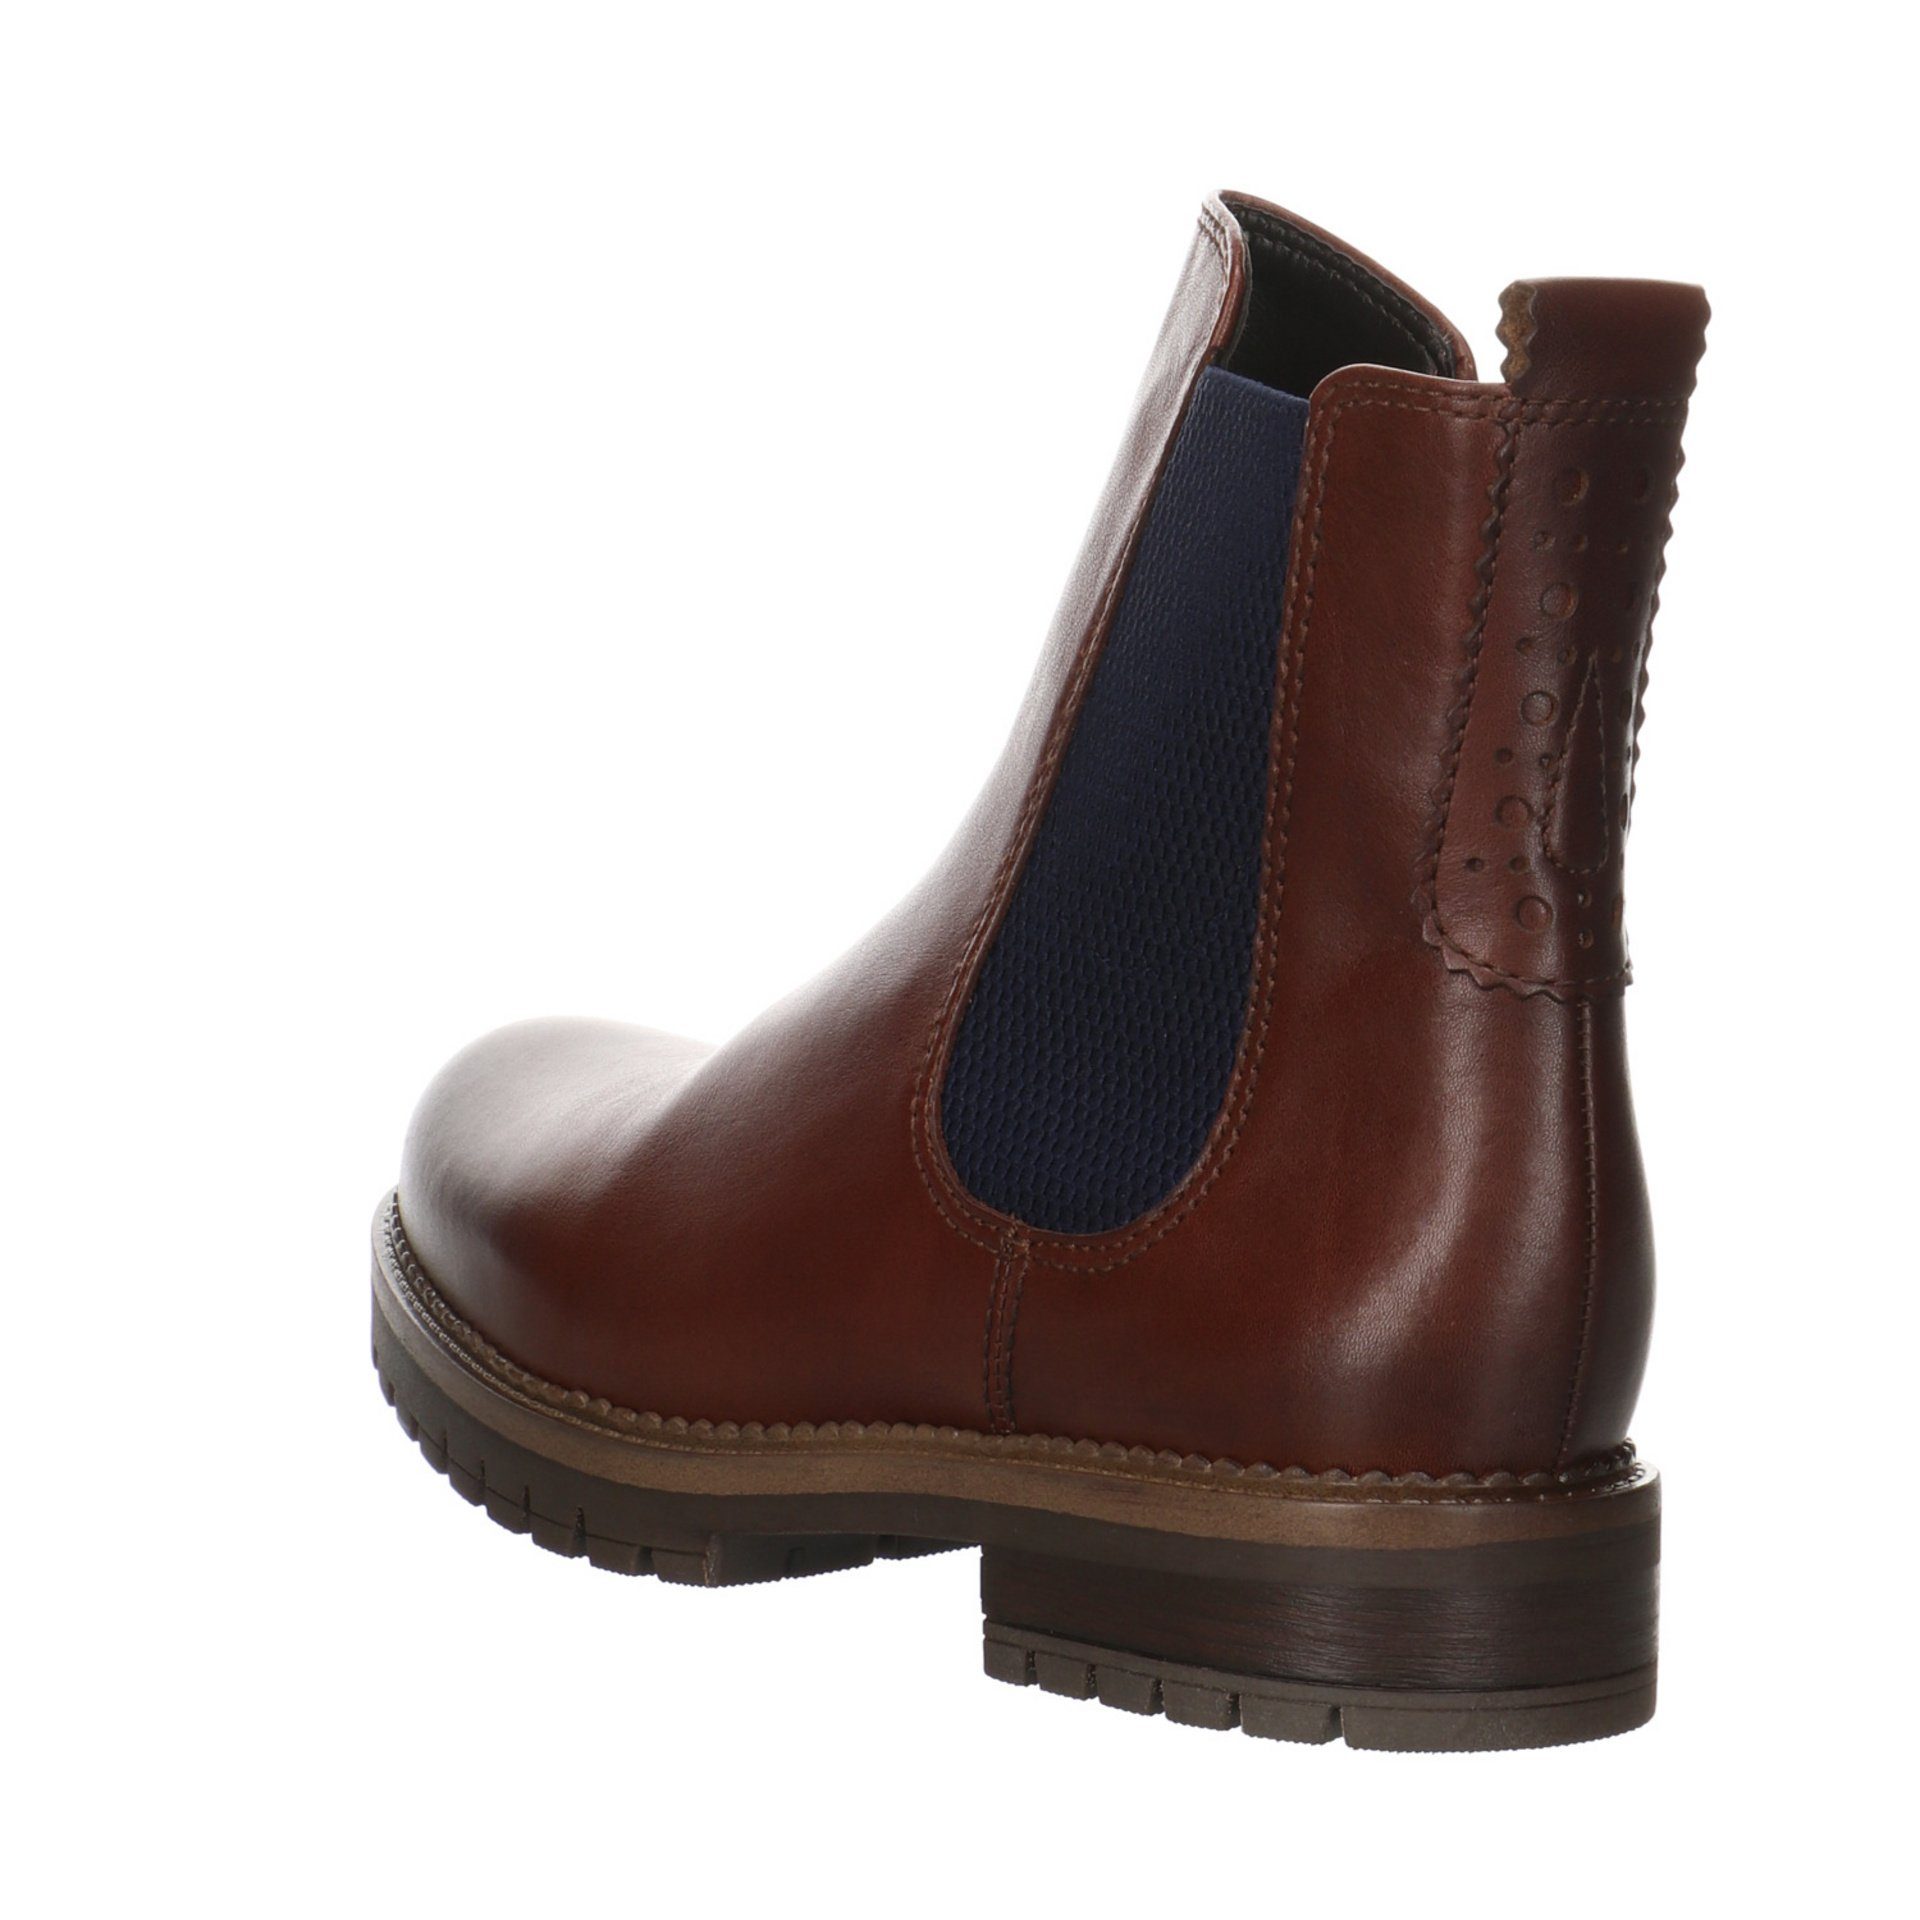 Gabor Damen Stiefel Schuhe Leder-/Textilkombination Stiefel Chelsea (river) sattel Boots